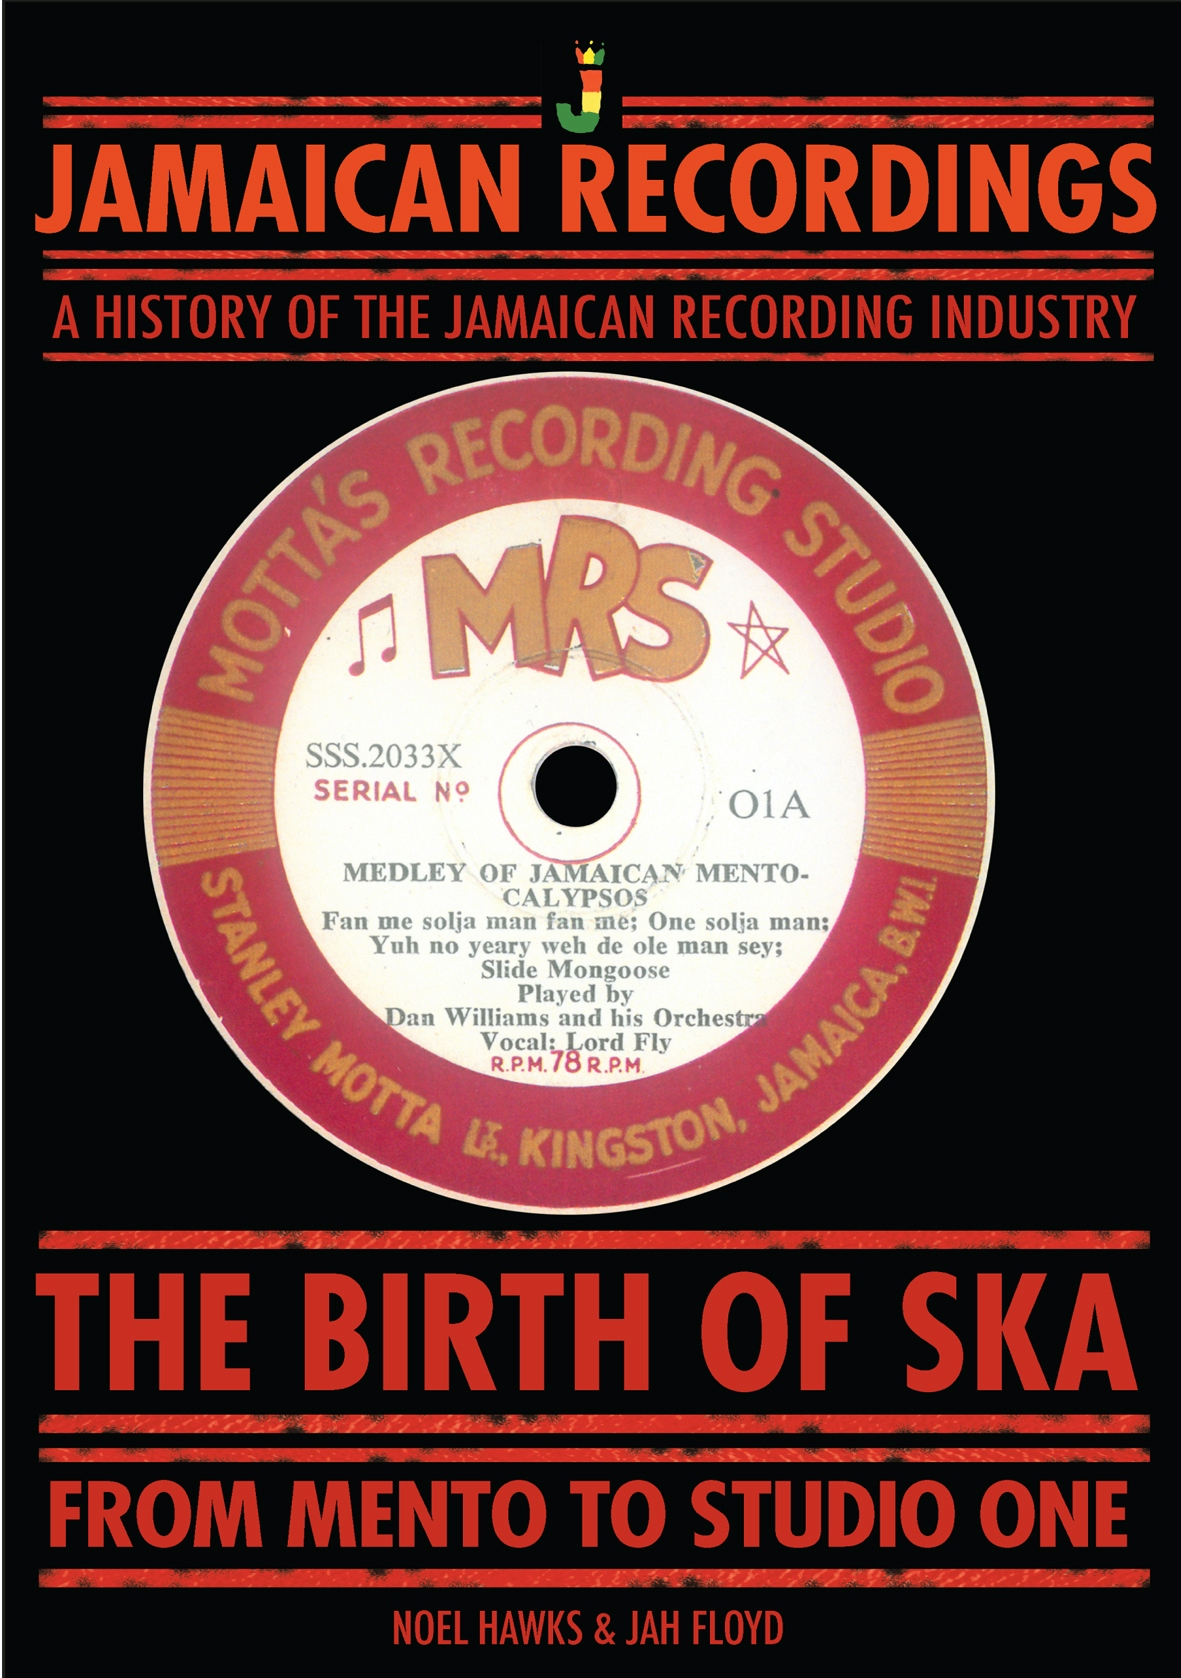 Album artwork for Album artwork for The Birth of Ska - From Mento to Studio One by Noel Hawks and Jah Floyd by The Birth of Ska - From Mento to Studio One - Noel Hawks and Jah Floyd